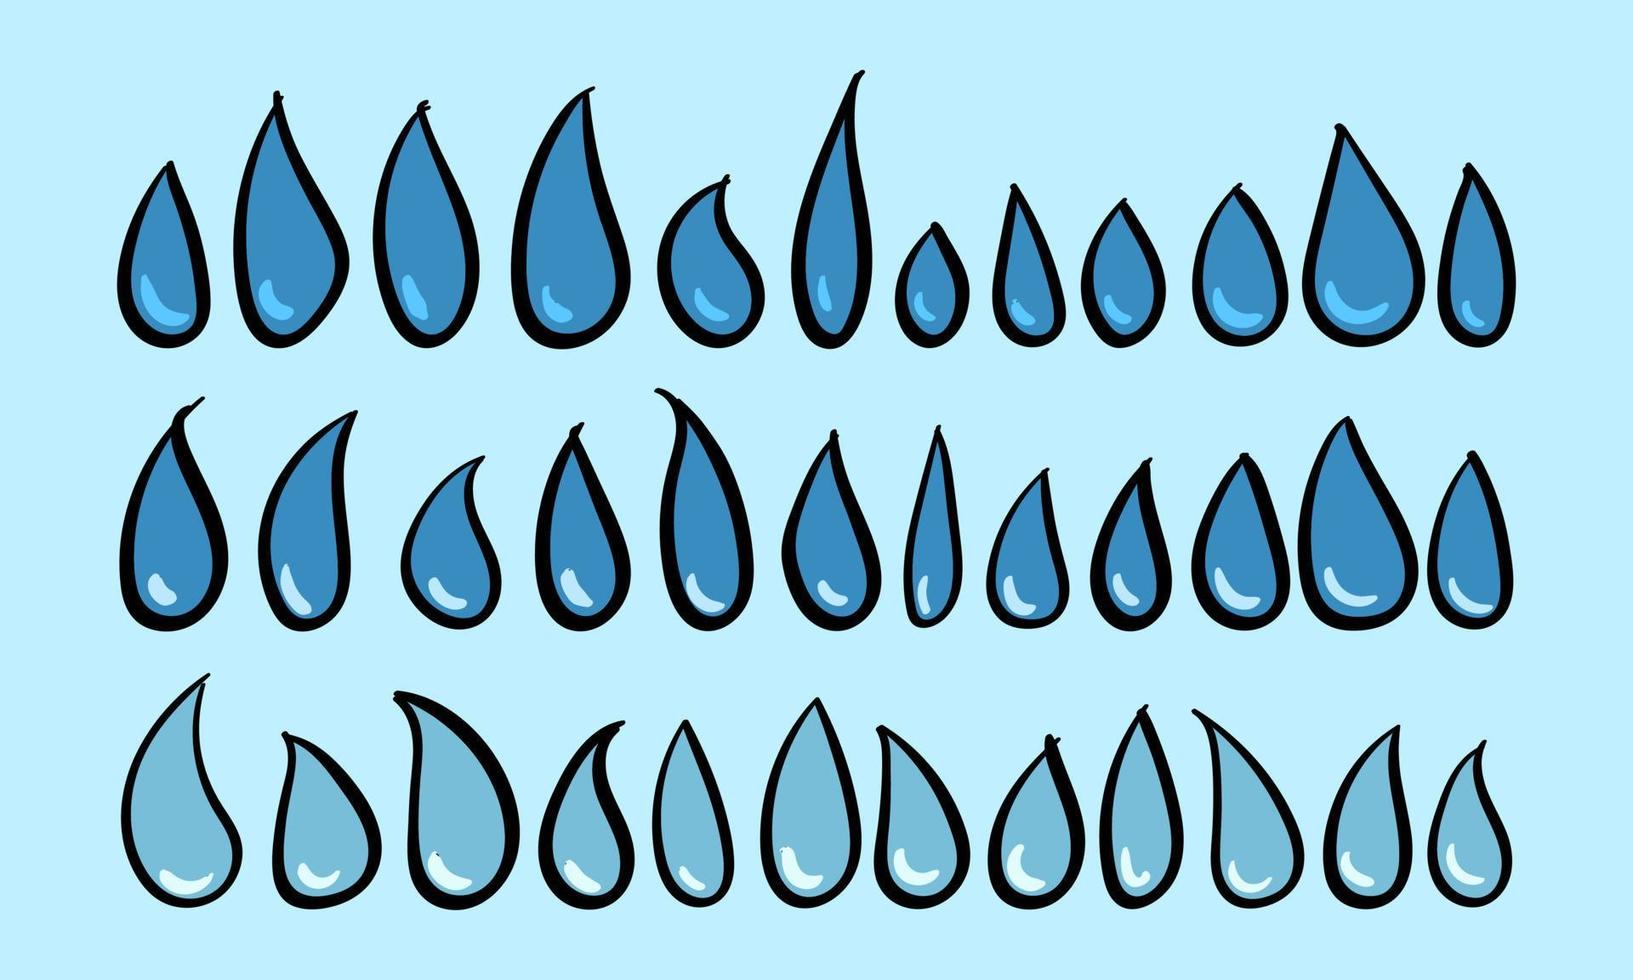 dibujado a mano ilustración de gota de agua vector